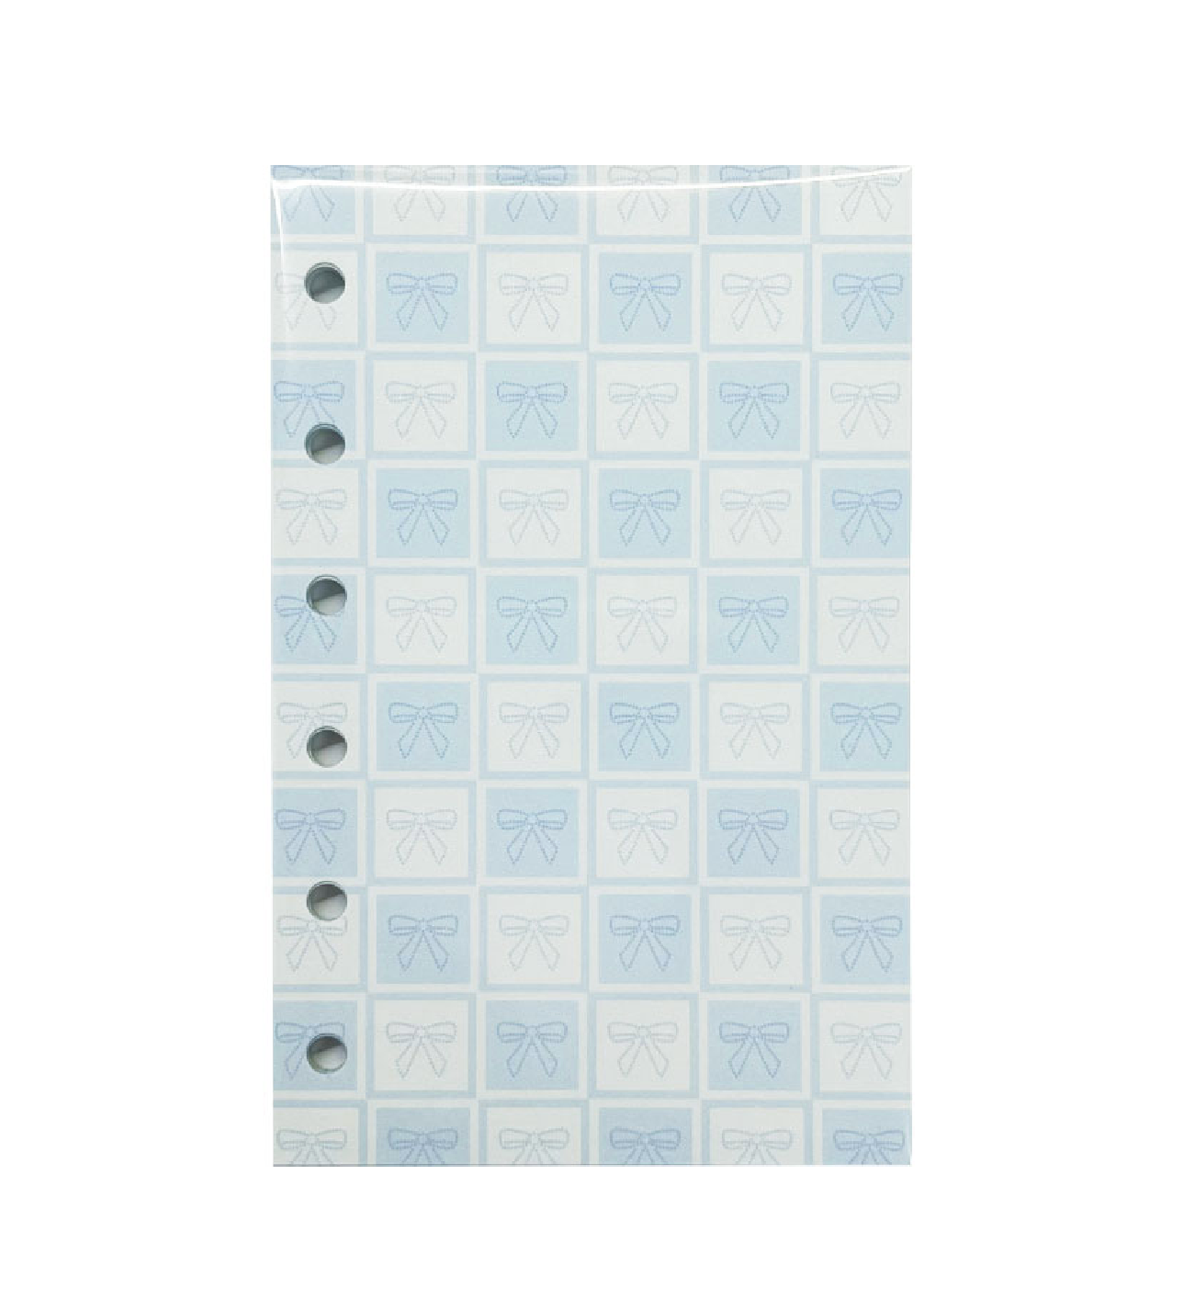 A7 Ribbon Pattern Paper Refill [Blue]